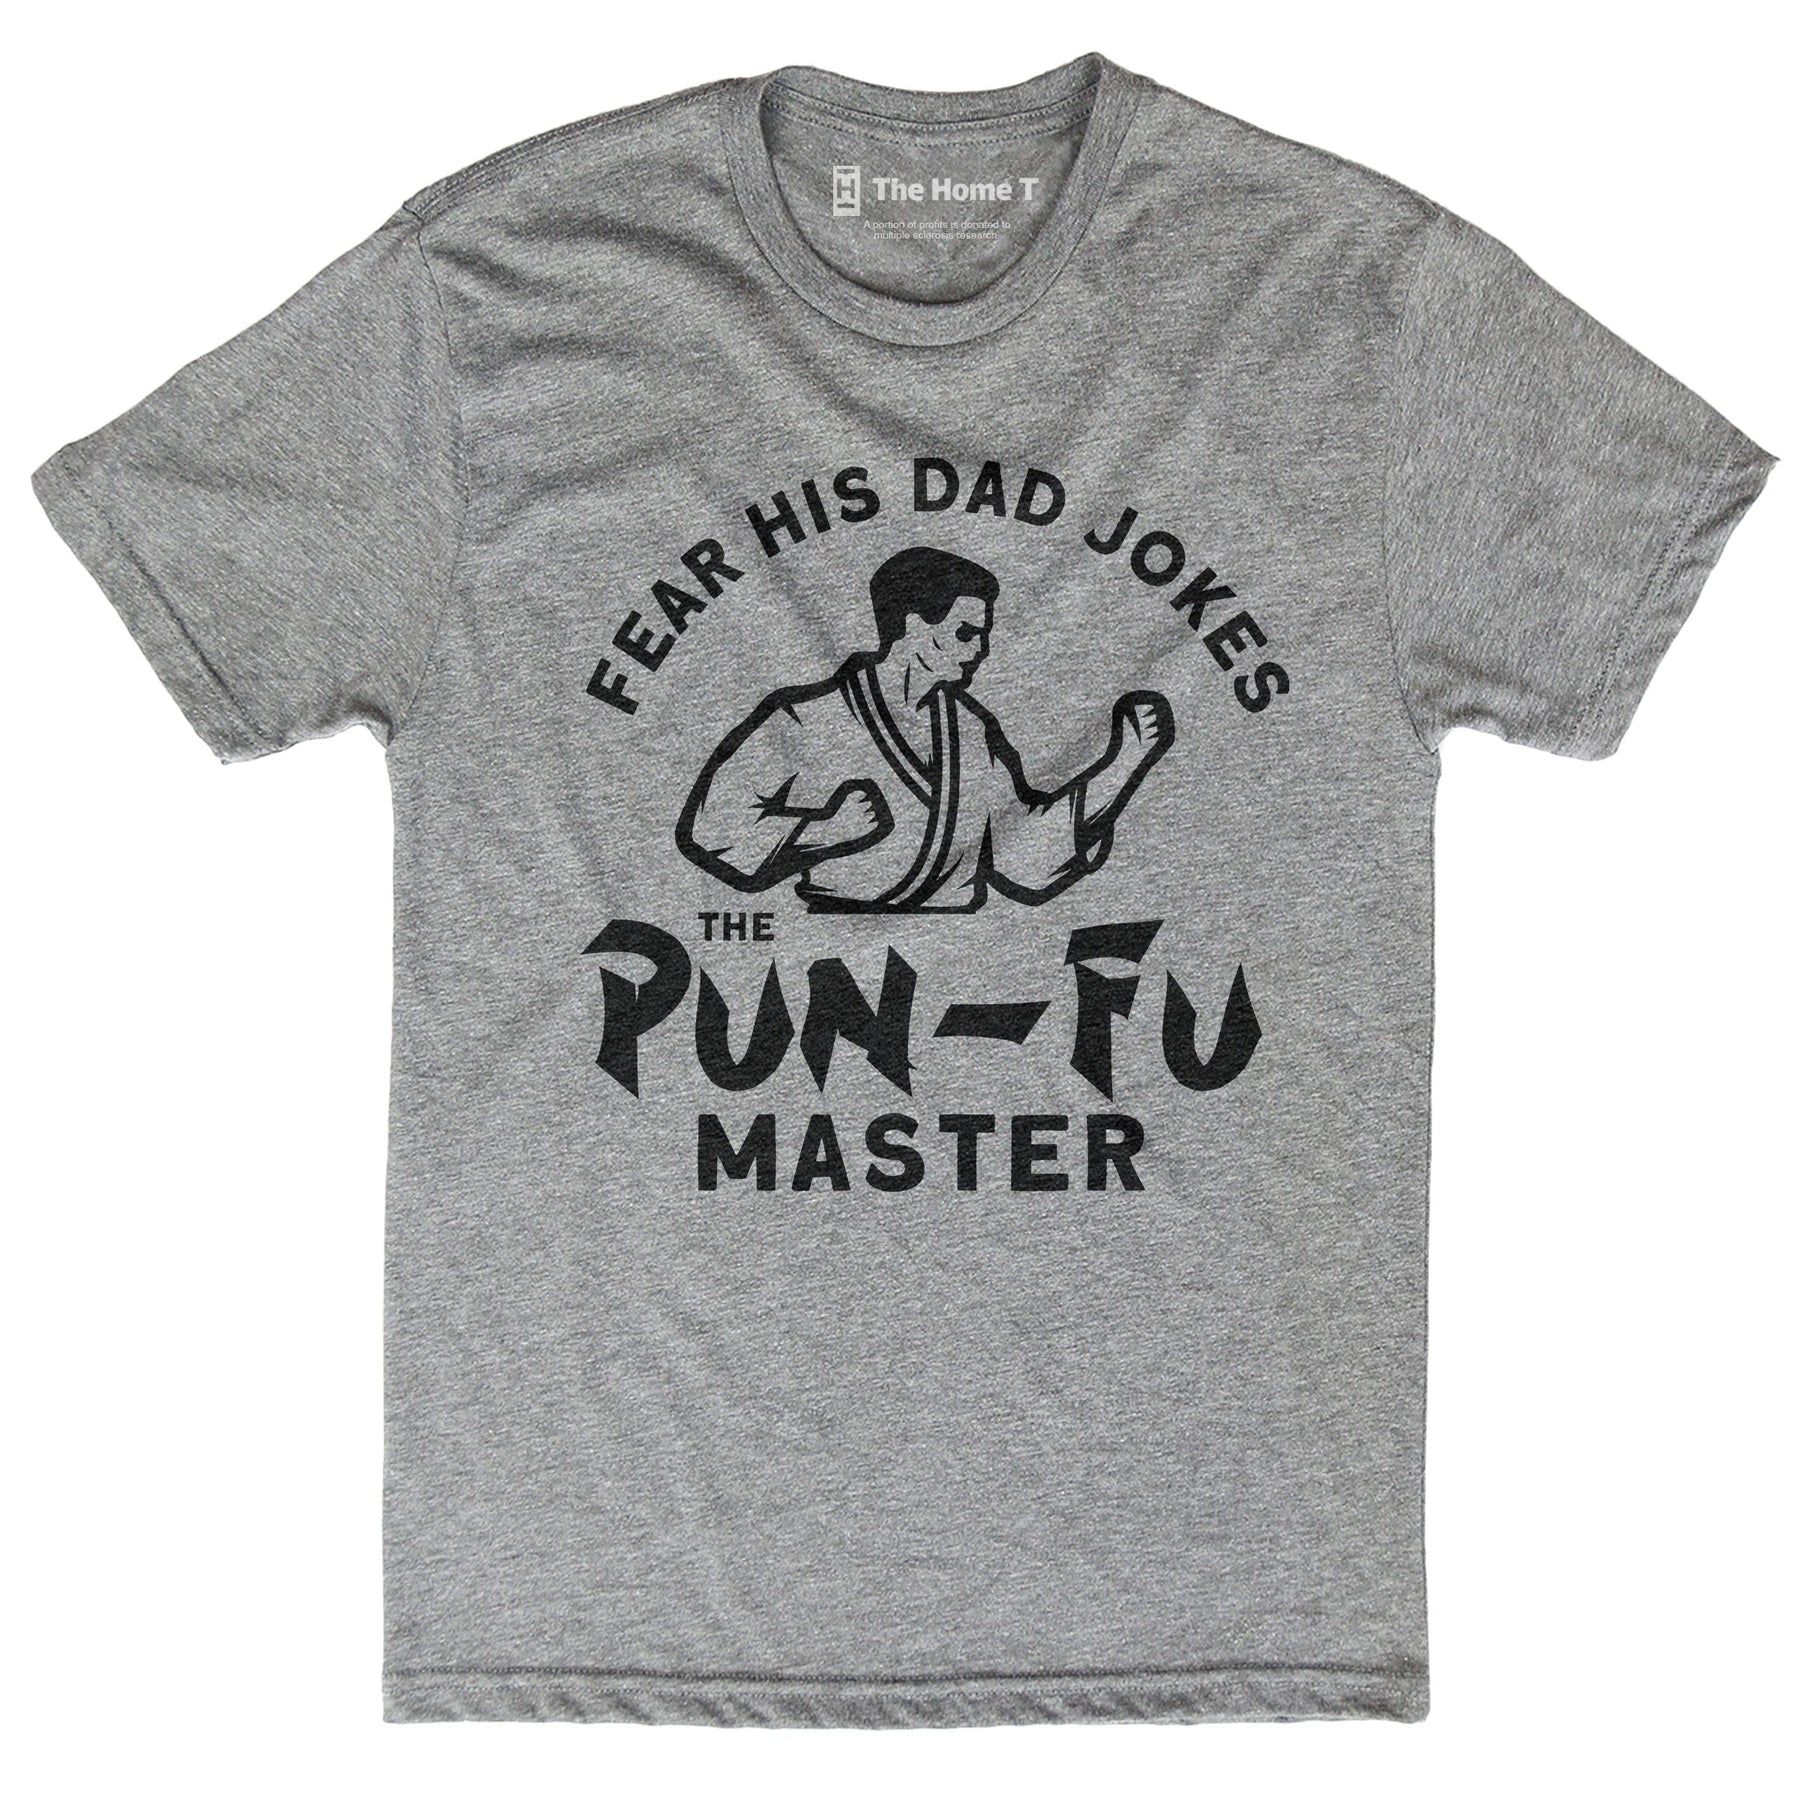 The Pun-Fu Master